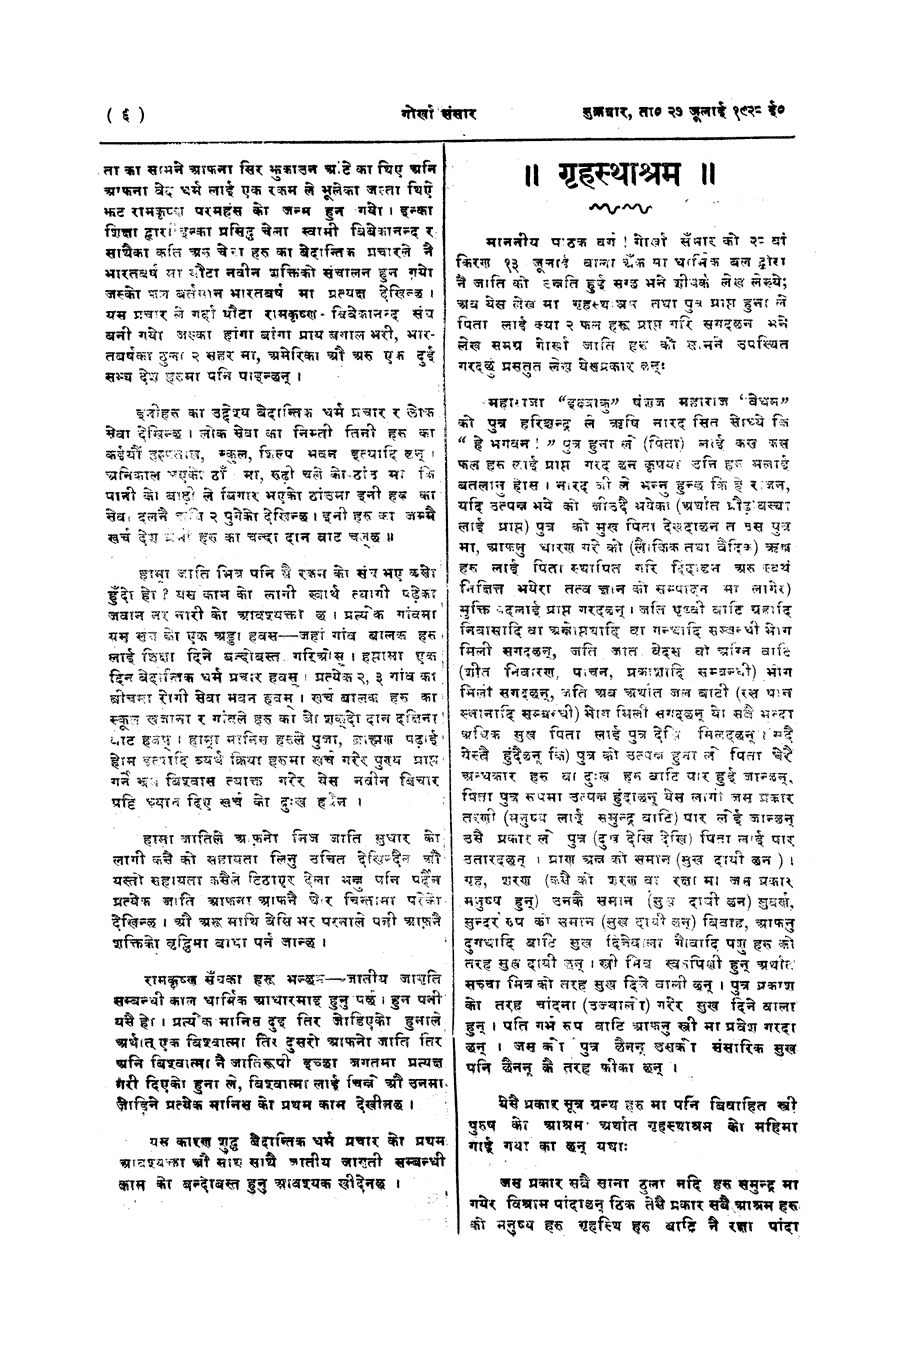 Gorkha Sansar, 27 July 1928, page 6